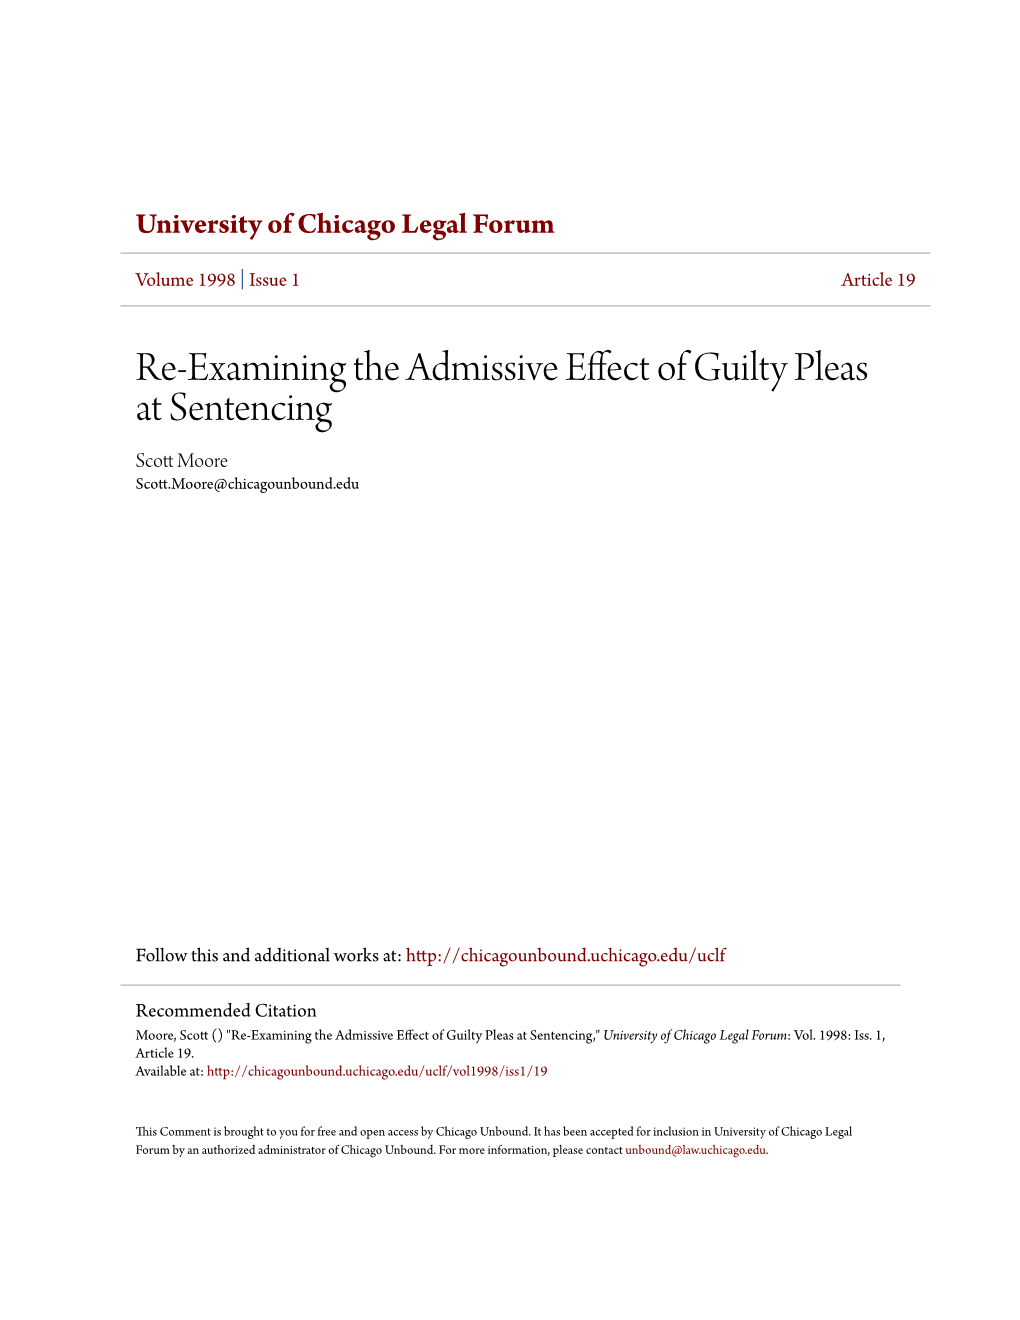 Re-Examining the Admissive Effect of Guilty Pleas at Sentencing Scott Om Ore Scott.Moore@Chicagounbound.Edu